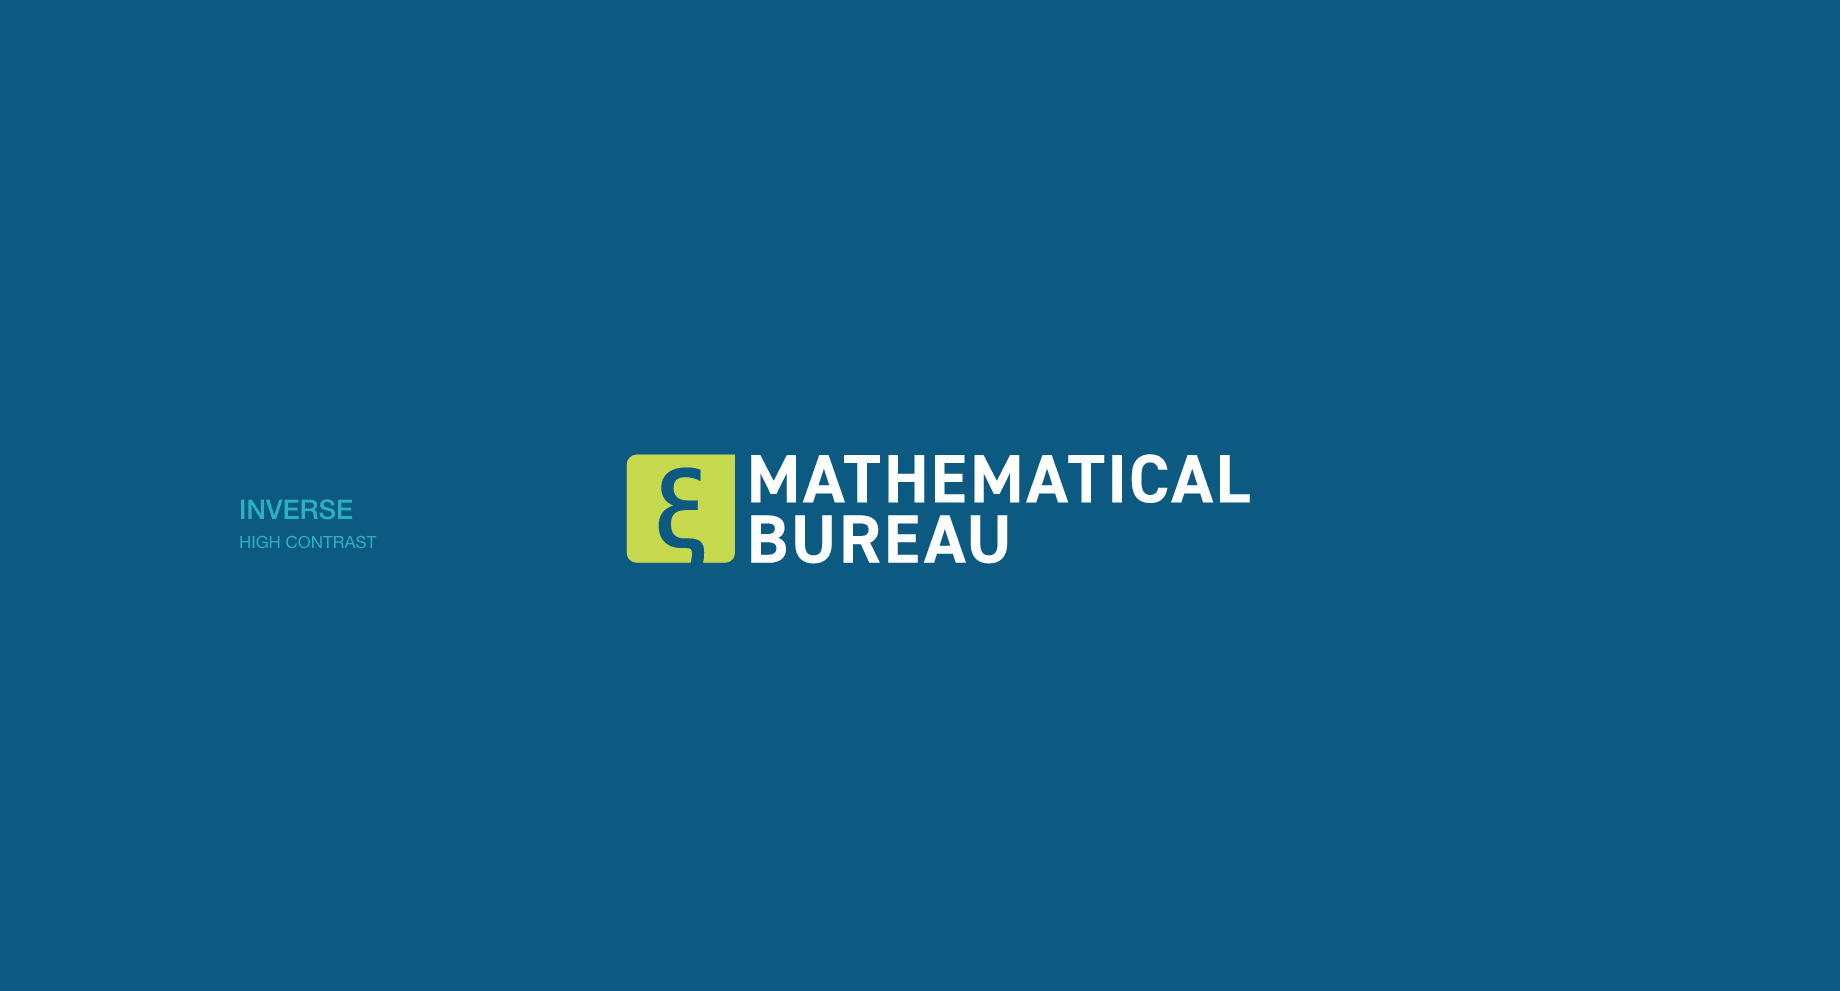 Mathematical bureau - image 8